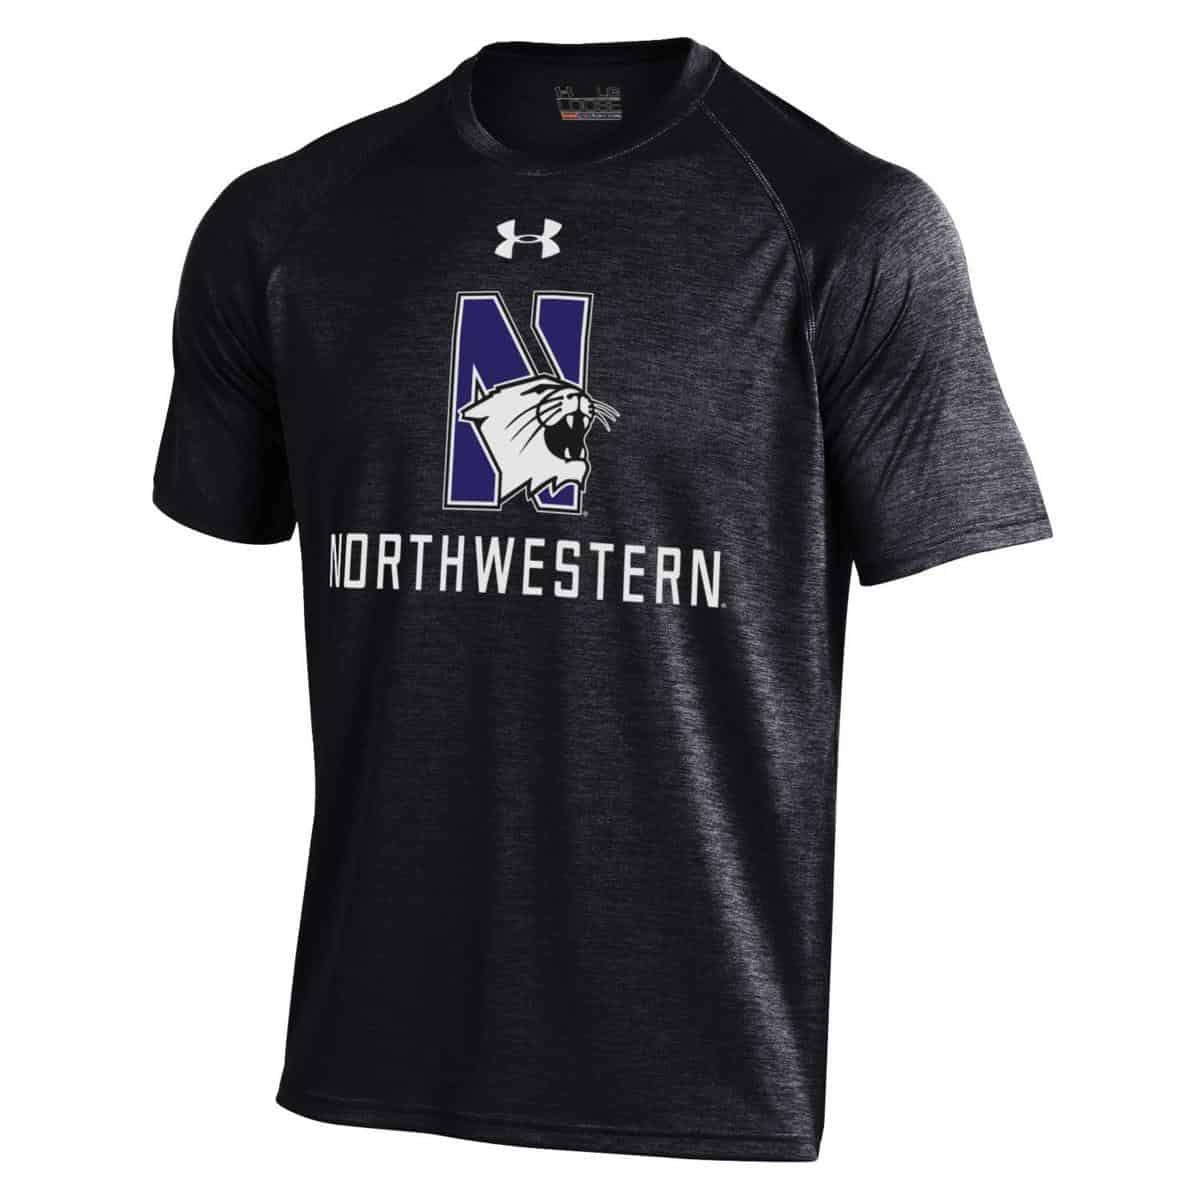 Northwestern Wildcats Men’s Under Armour Black Short Sleeve Microthread Tee